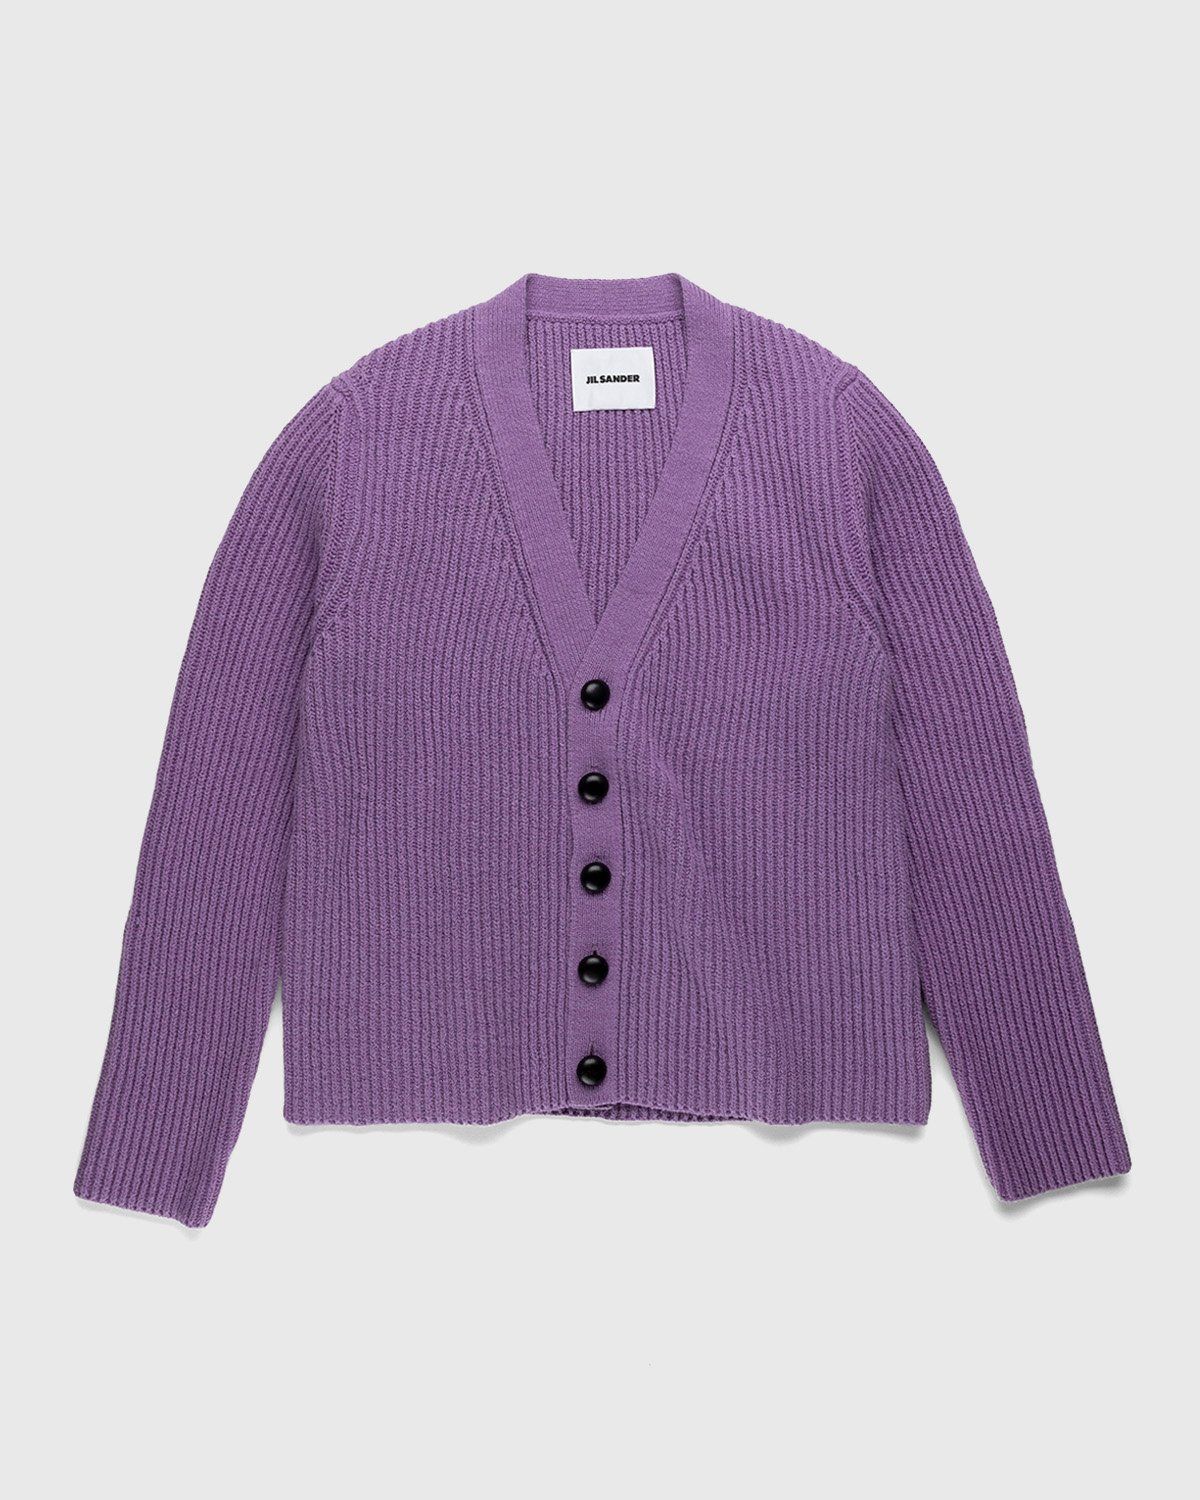 Jil Sander – Rib Knit Cardigan Medium Purple - Cardigans - Purple - Image 1